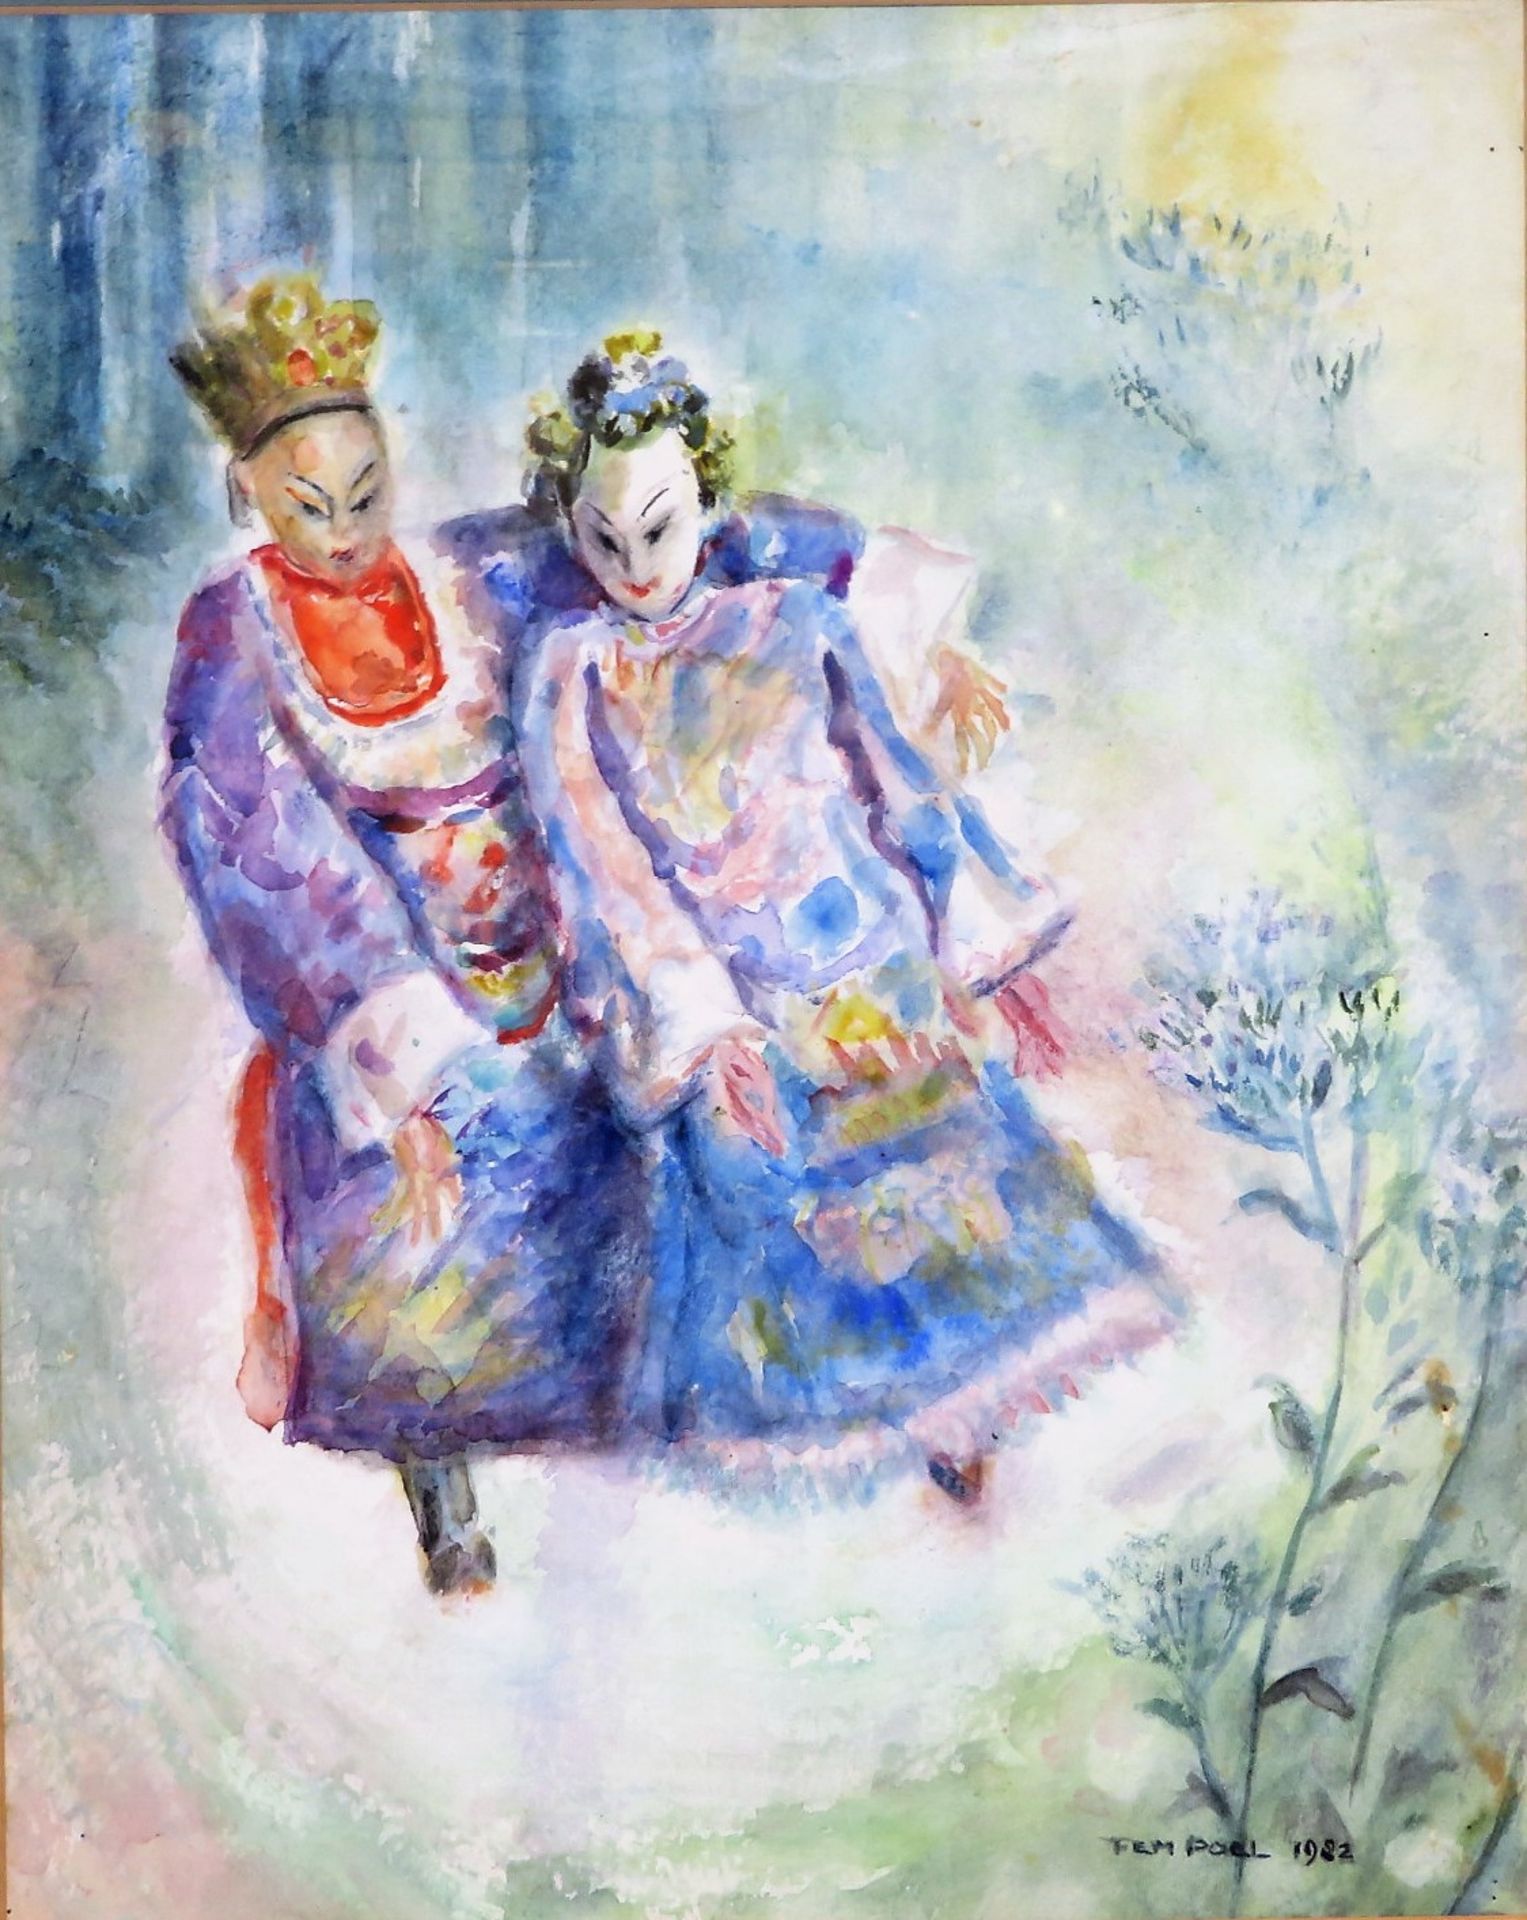 Poel, Fem, "Asiatisches Kaiserpaar", re.u.sign.u.dat. 1982, Aquarell, 41 x 33 cm, R. [58 x 49 cm]